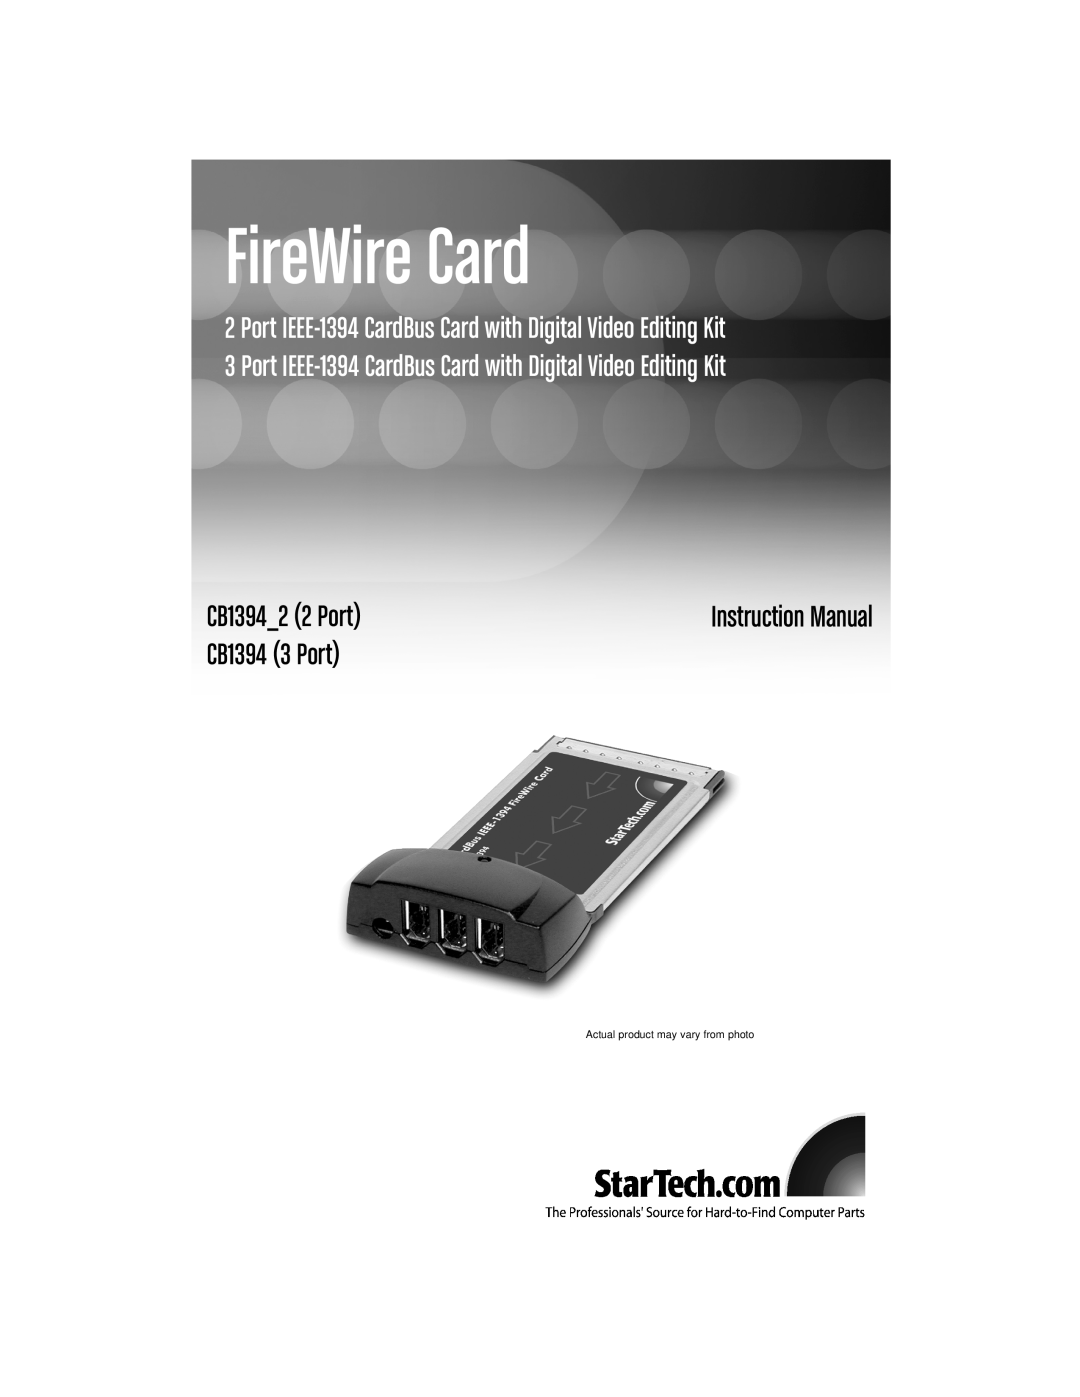 StarTech.com CB 1394_2 instruction manual FireWire Card, CB13942 2 Port, CB1394 3 Port, Instruction Manual 